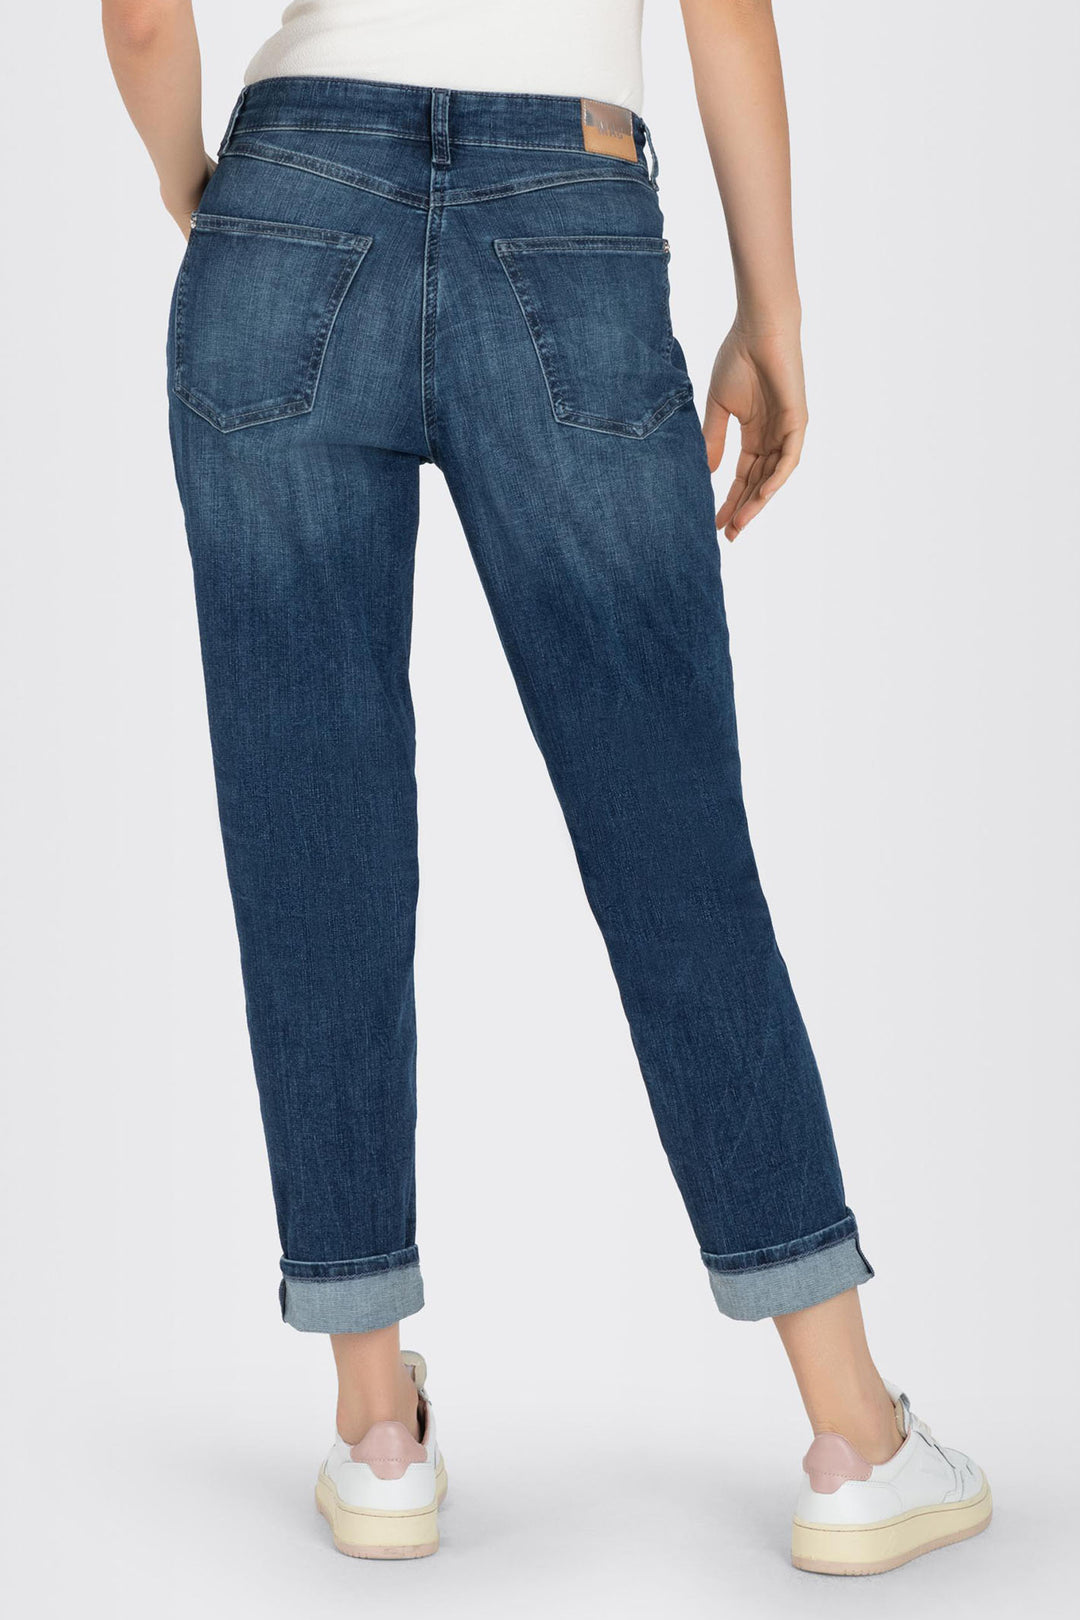 Mac 3197-90-0391 D627 Carol Blue Net Wash Lightweight Denim Jeans - Olivia Grace Fashion